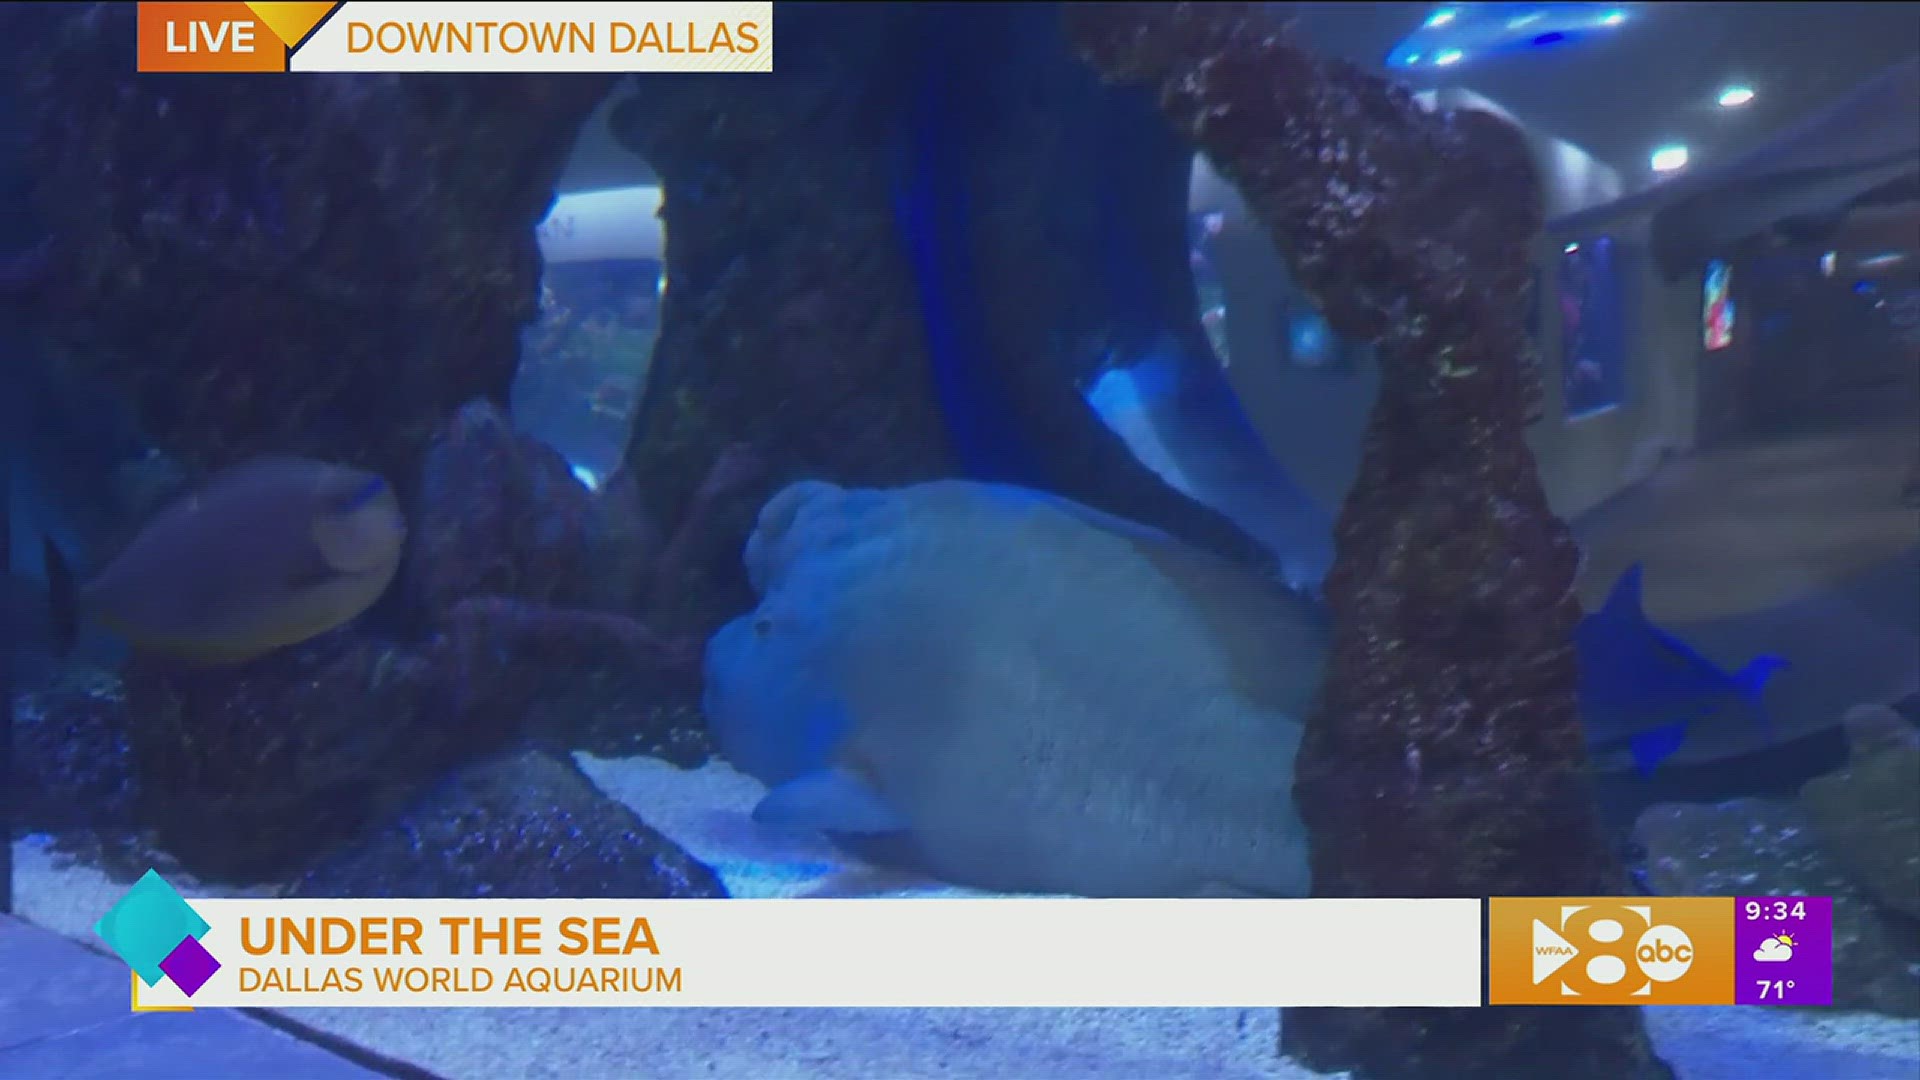 Paige took a deeper dive of the Dallas World Aquarium for an ocean view.